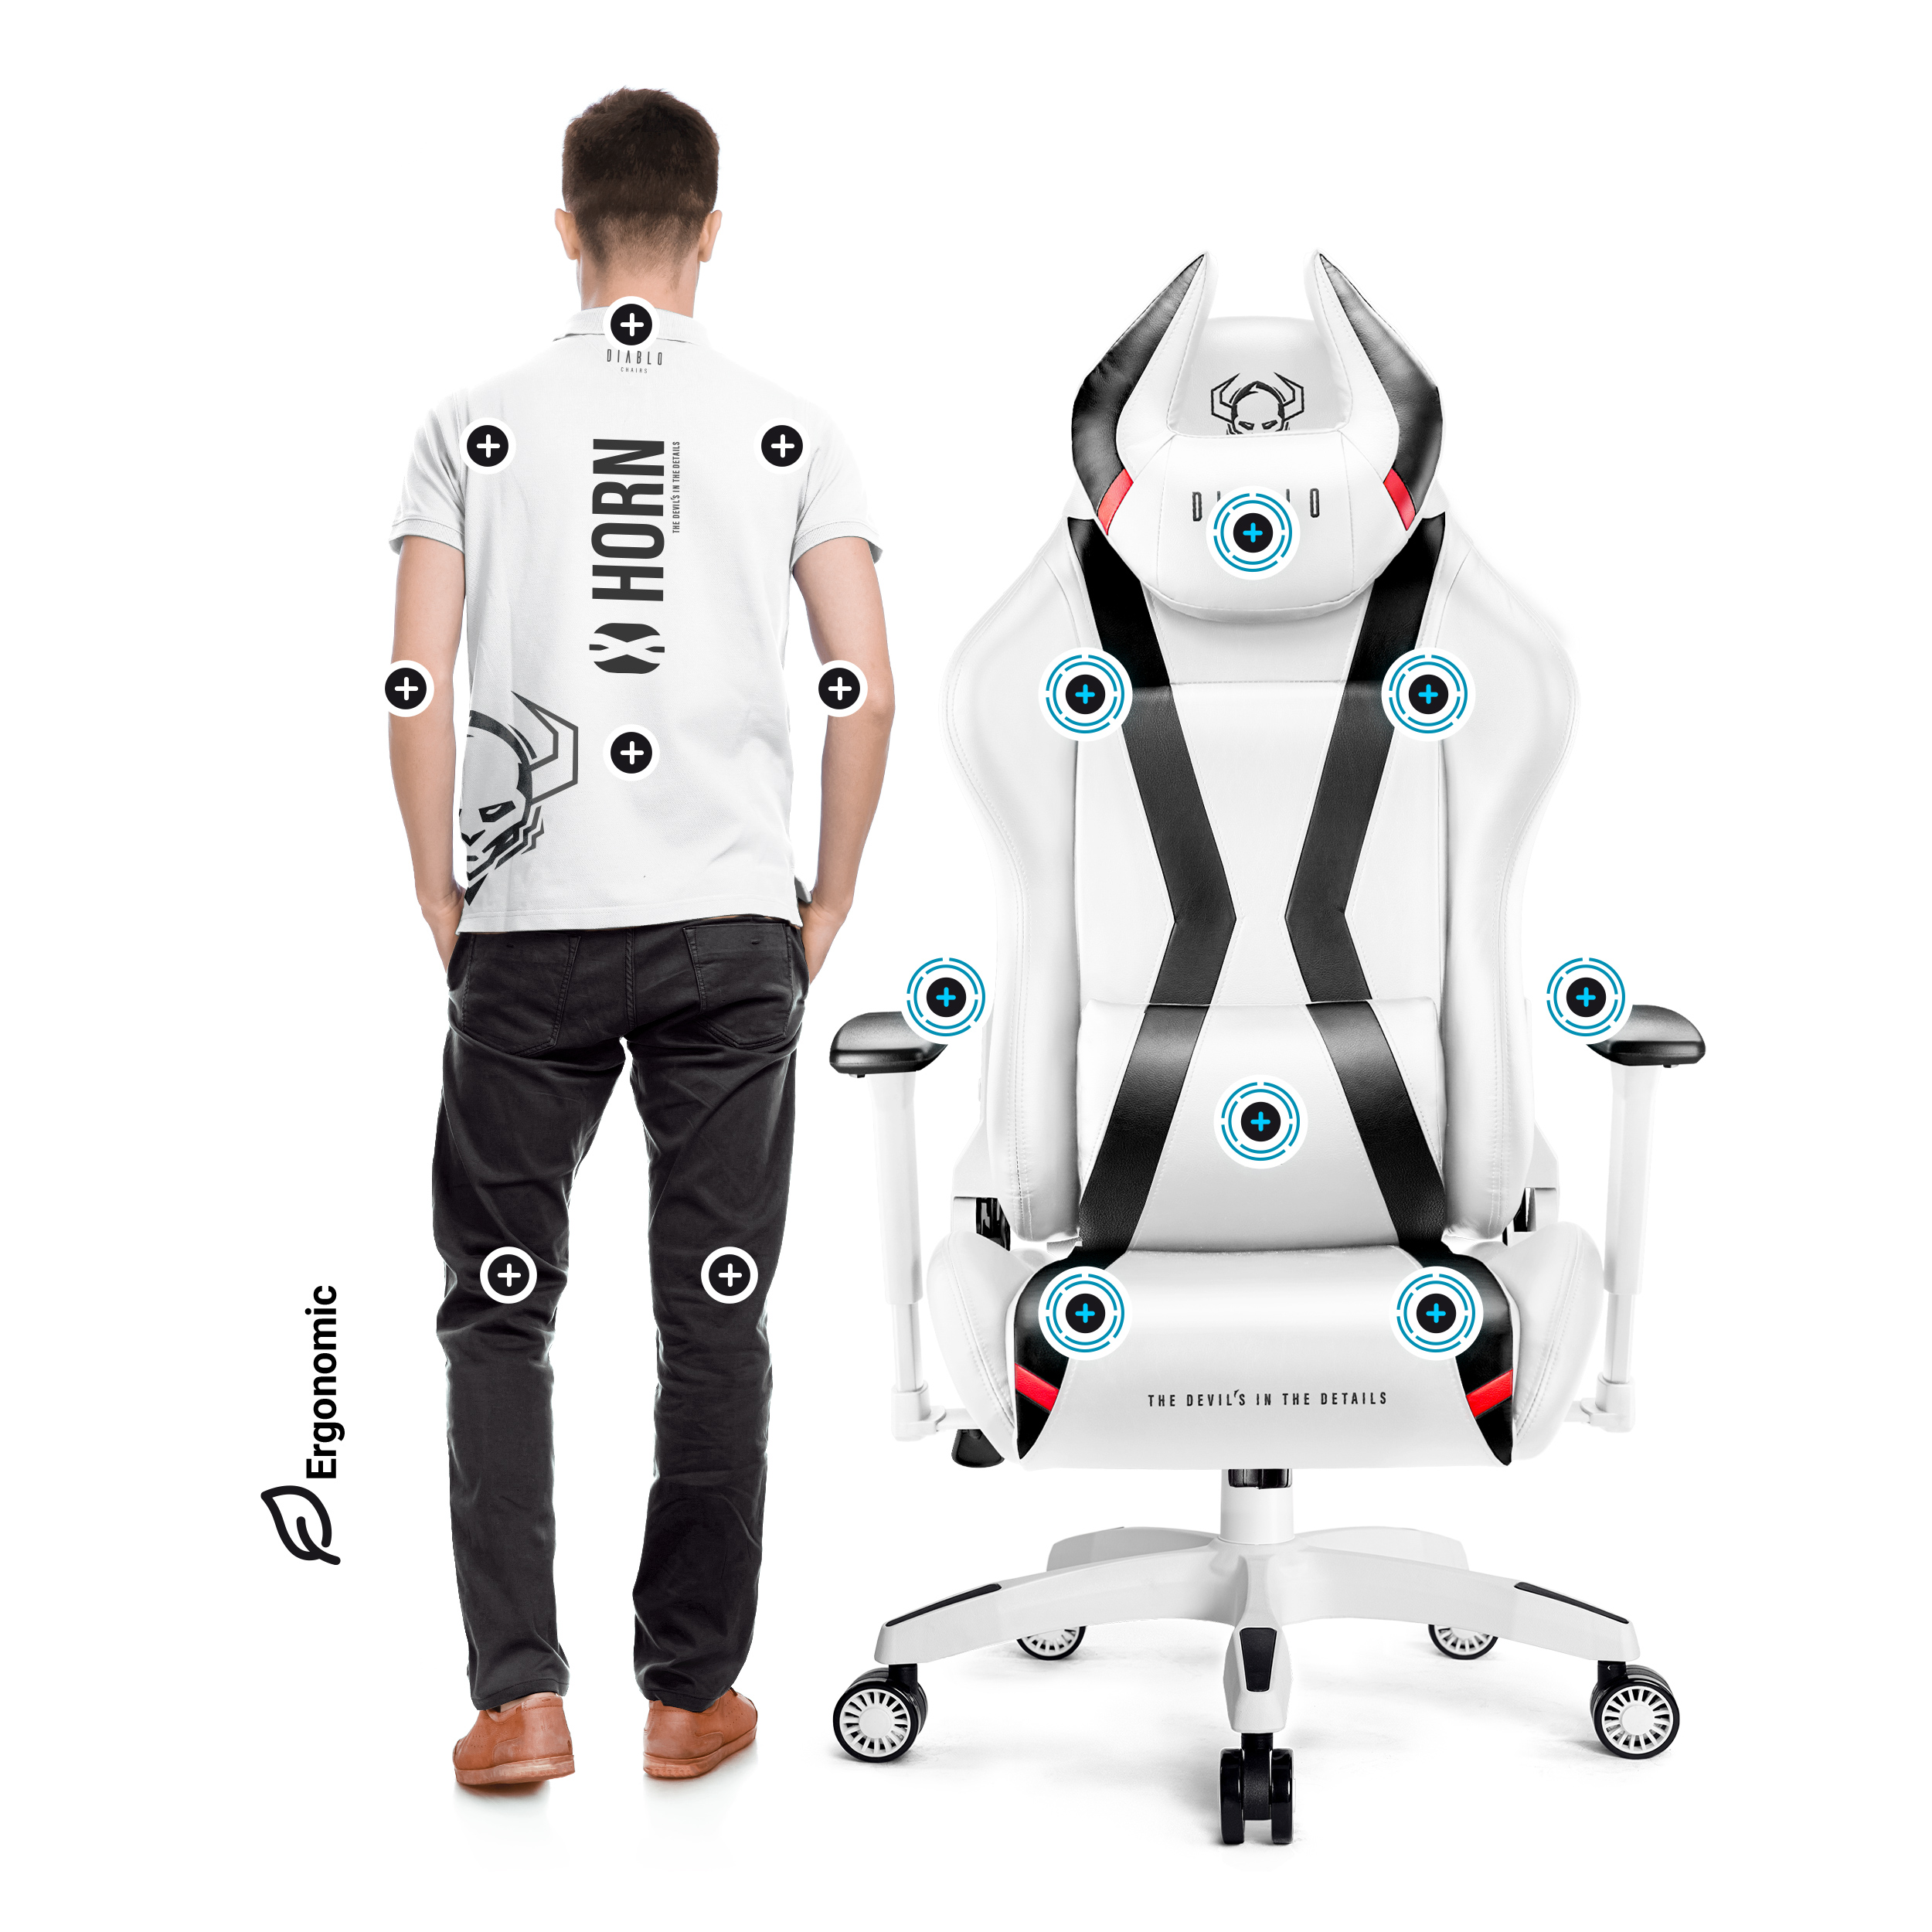 DIABLO CHAIRS GAMING STUHL X-HORN white KING 2.0 Chair, Gaming